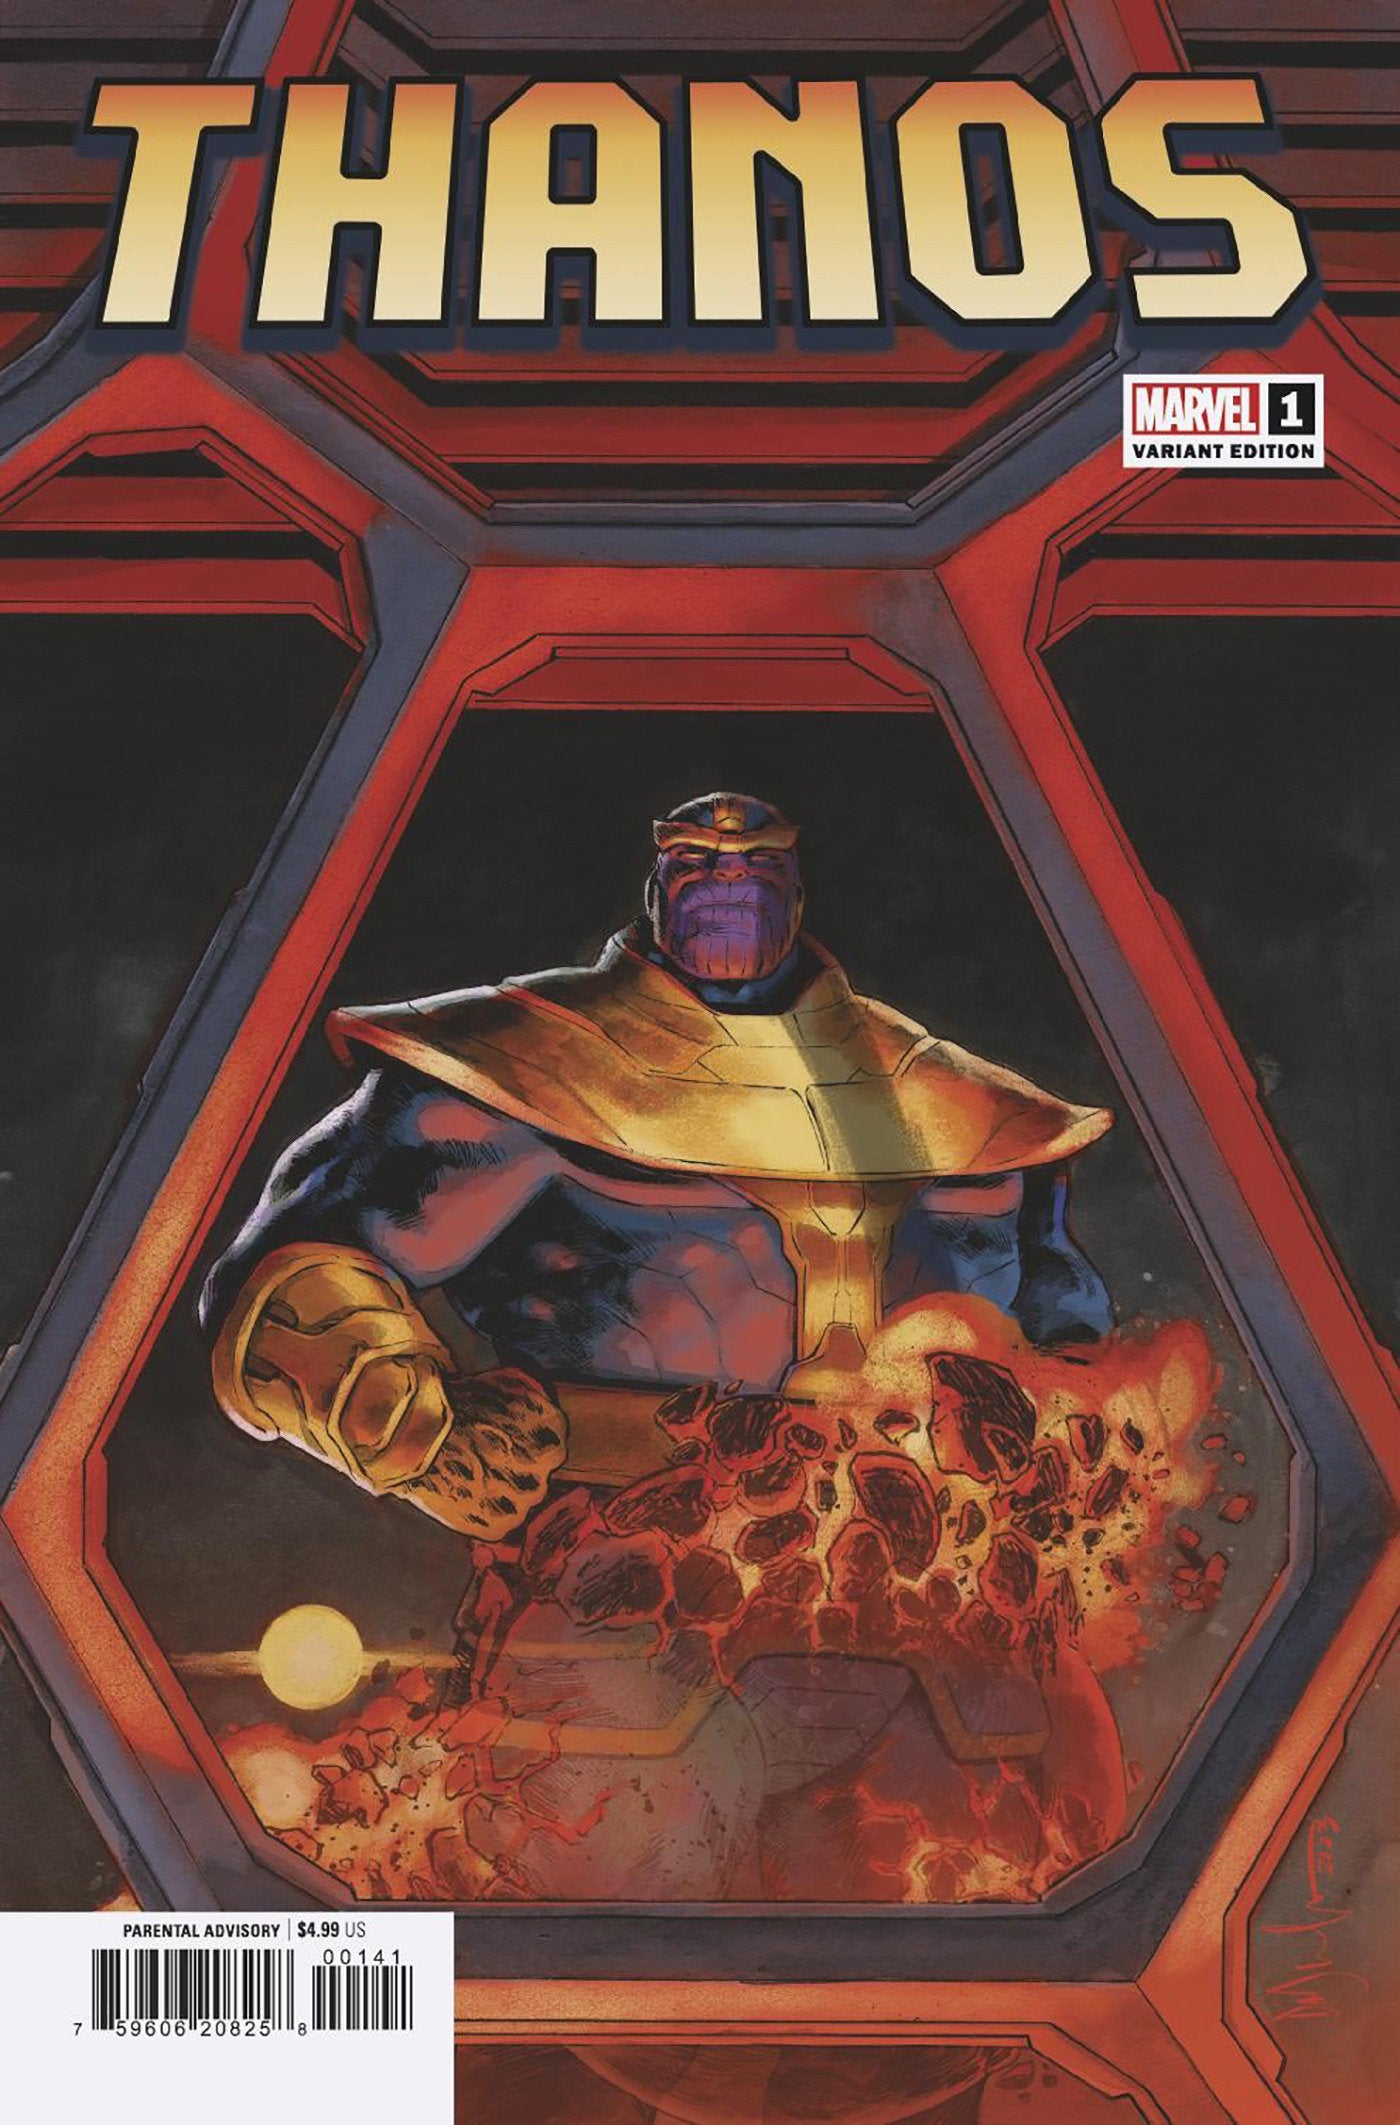 Marvel announces Thanos: Death Notes one-shot